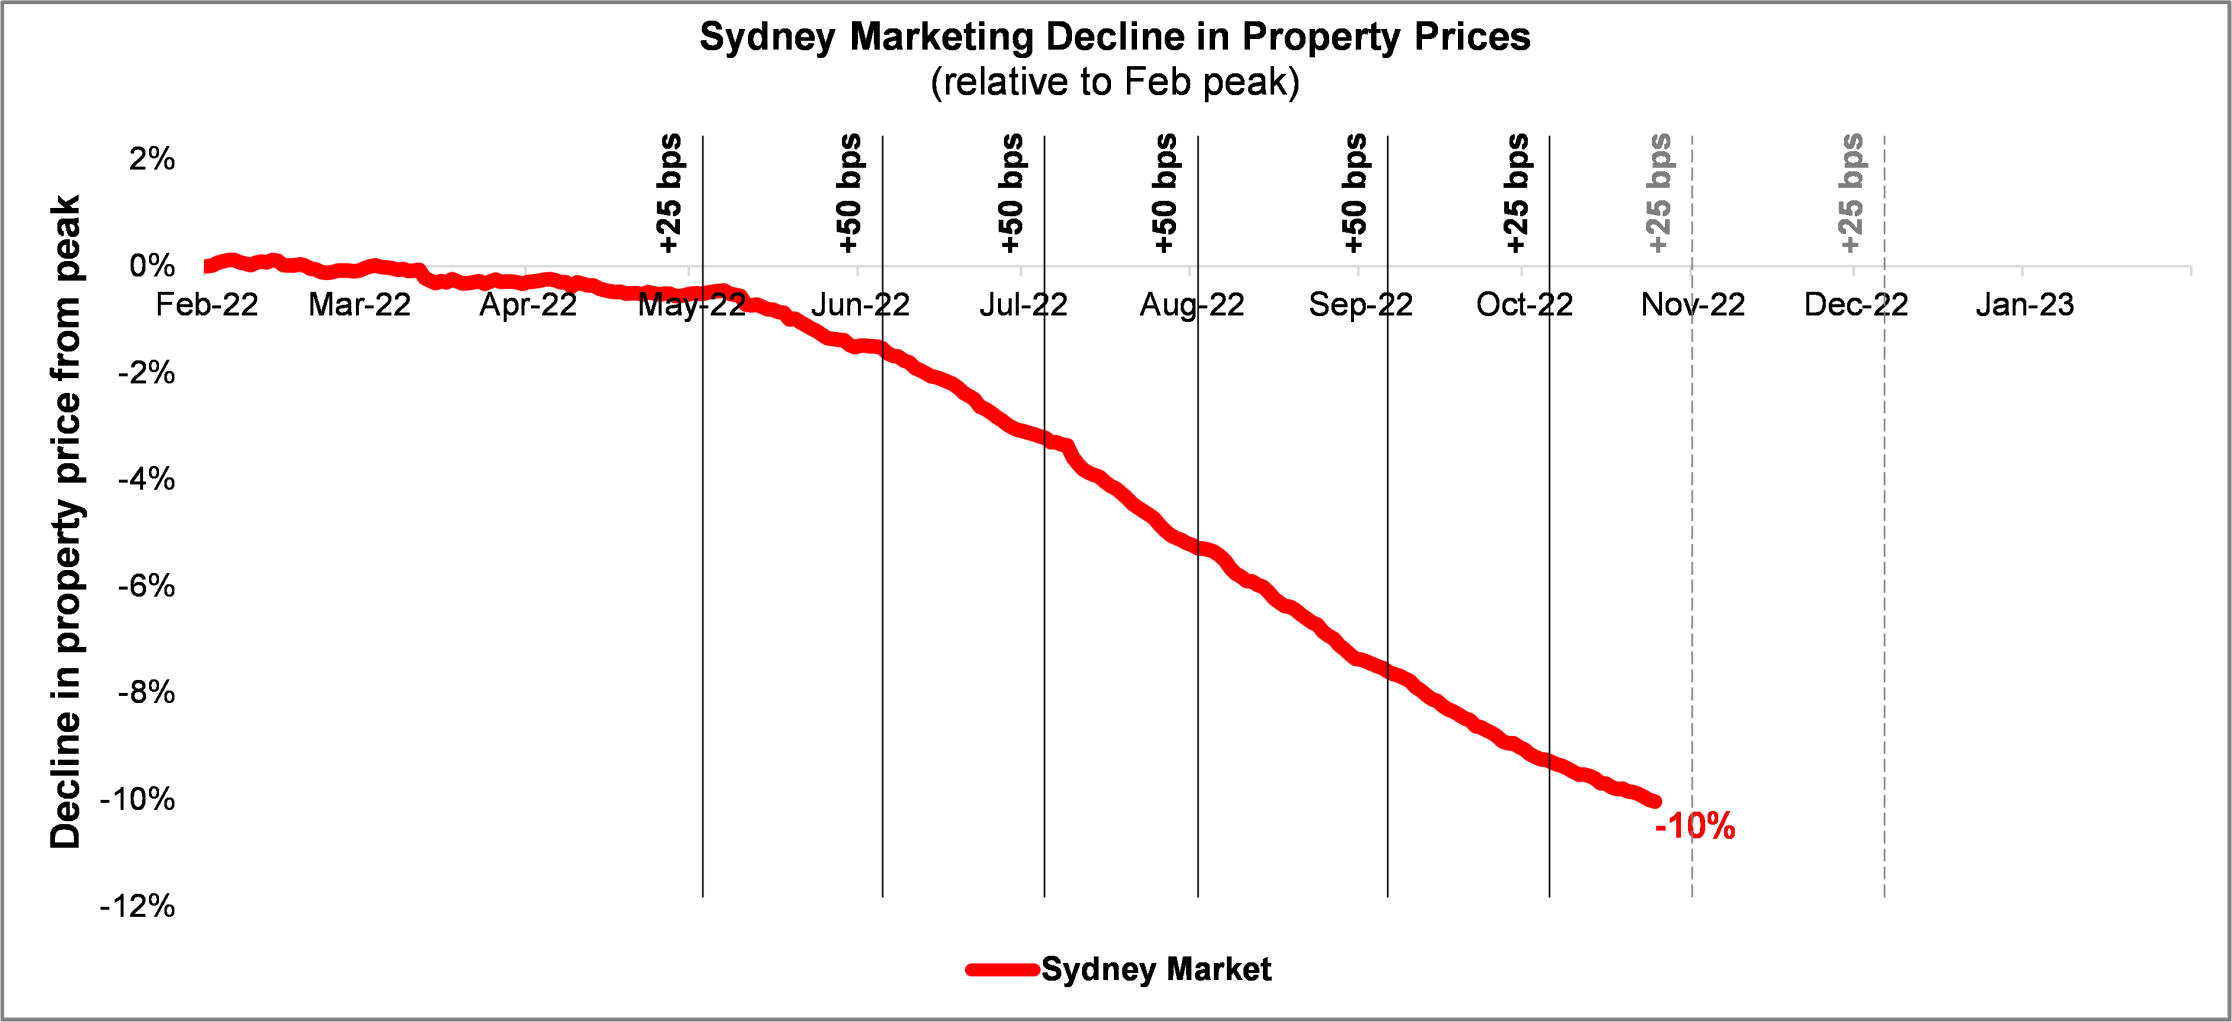 Sydney Marketing Decline in Property Prices